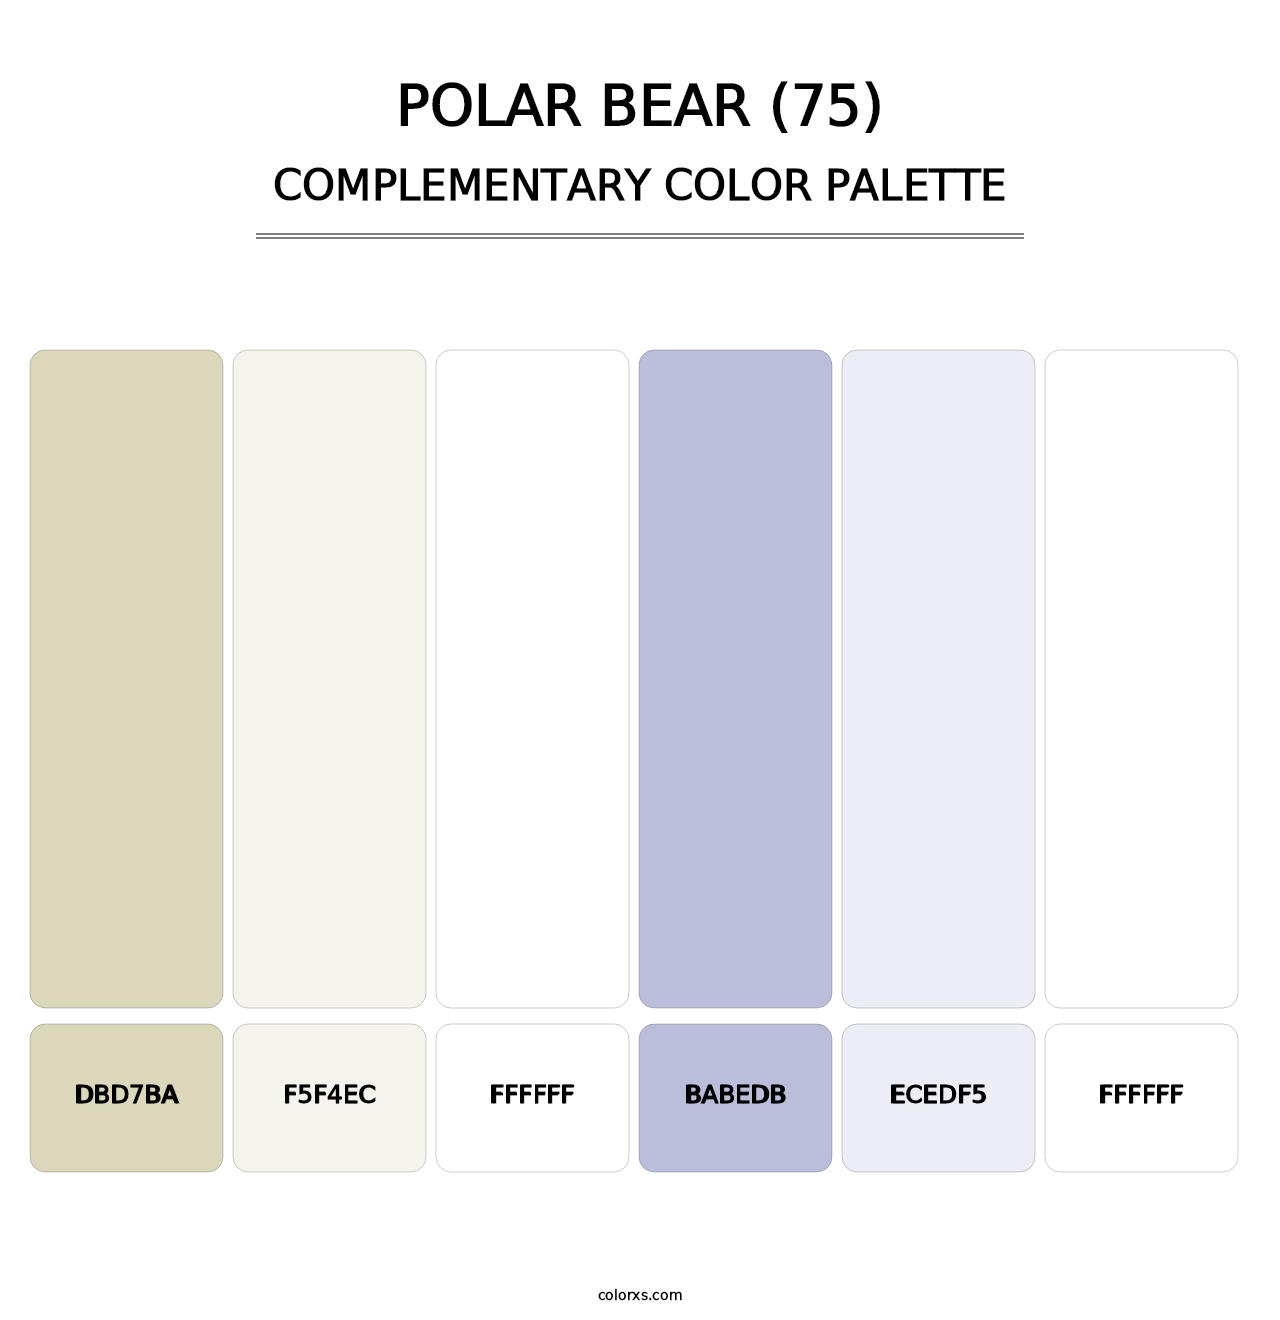 Polar Bear (75) - Complementary Color Palette